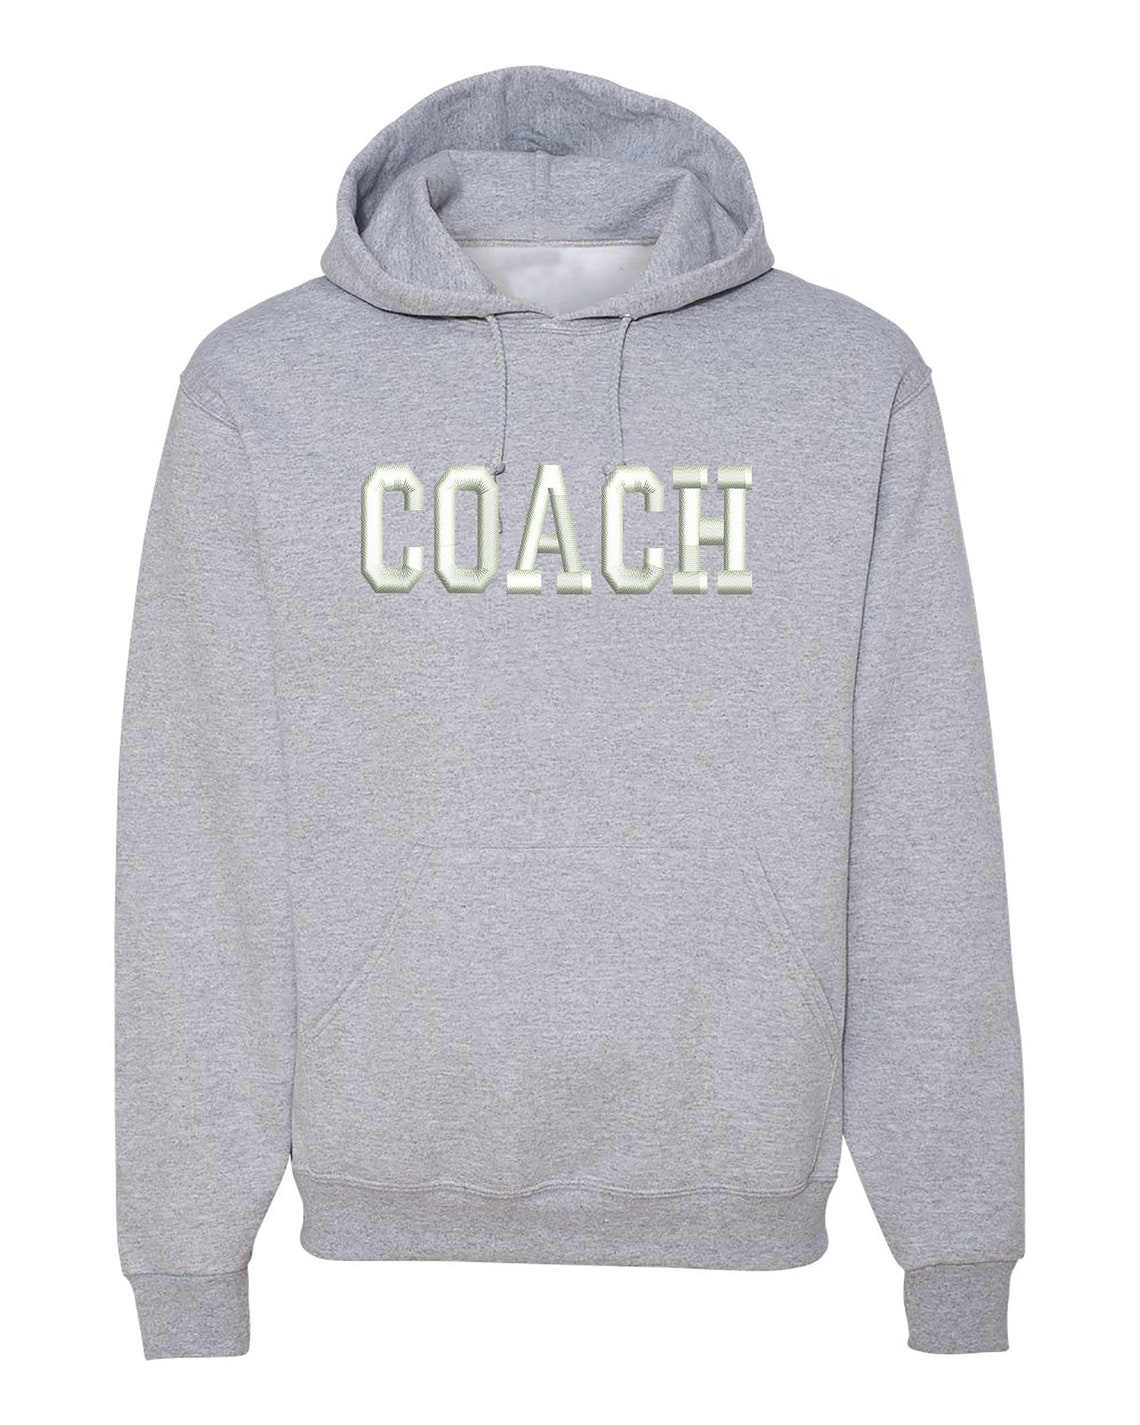 Coach Sweatshirt Unisex Embroidered Sweatshirt Sports Coach | Etsy